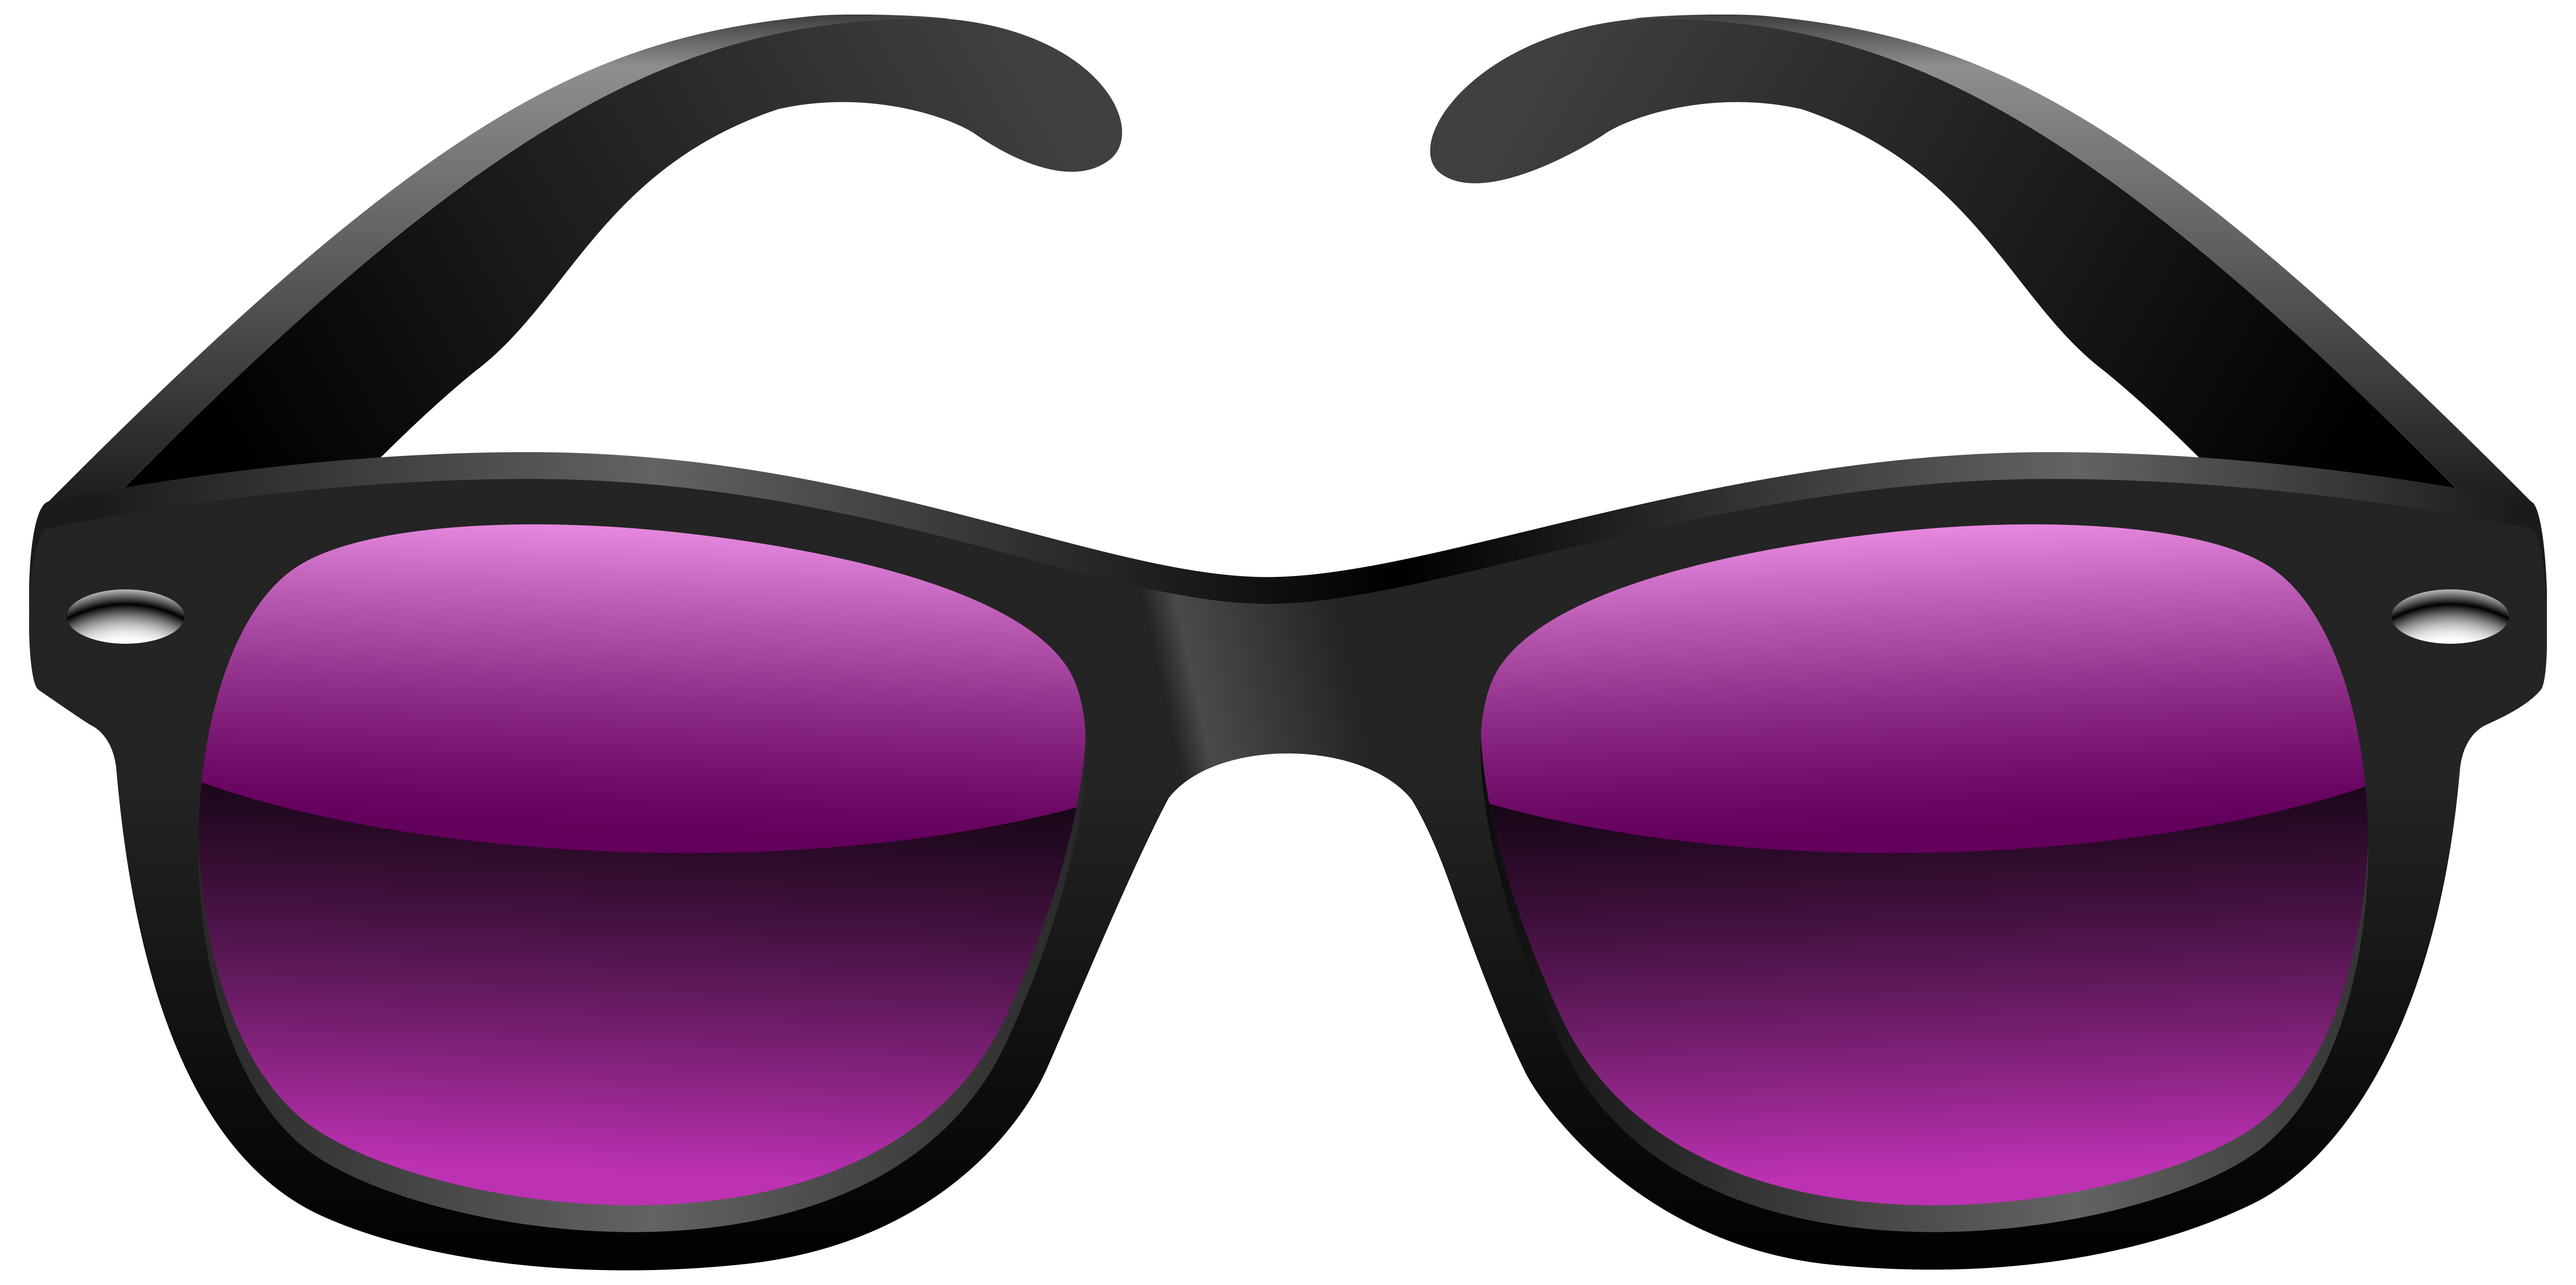 Black and purple sunglasses c - Sunglasses Clipart